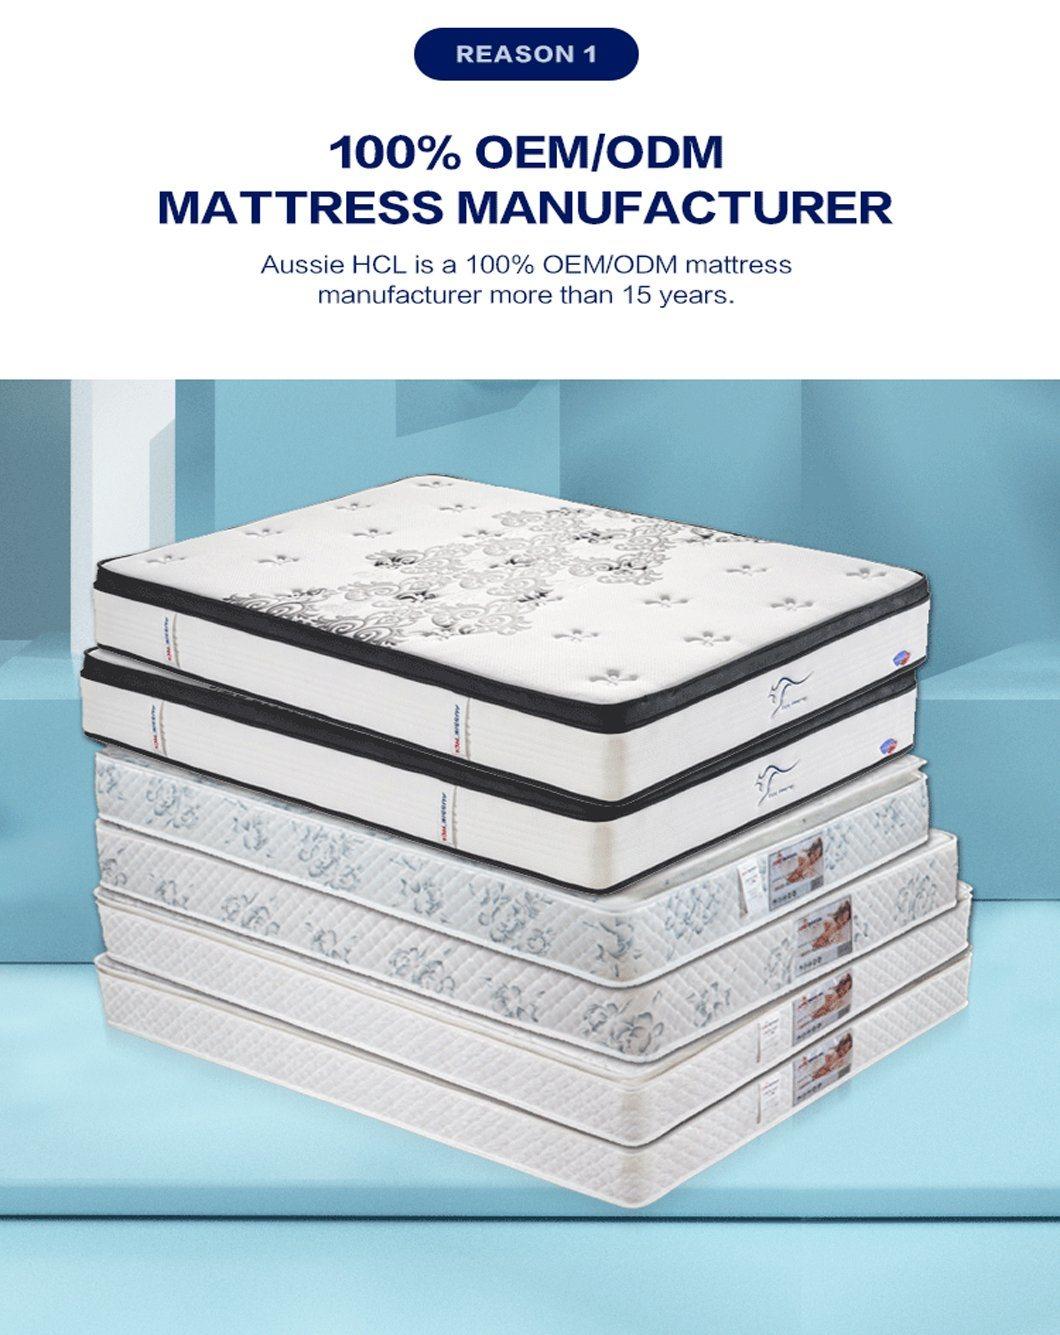 The Best Factory Aussie Quality Full Inch Mattress Colchon Twin Queen King Double Gel Memory Foam Mattress